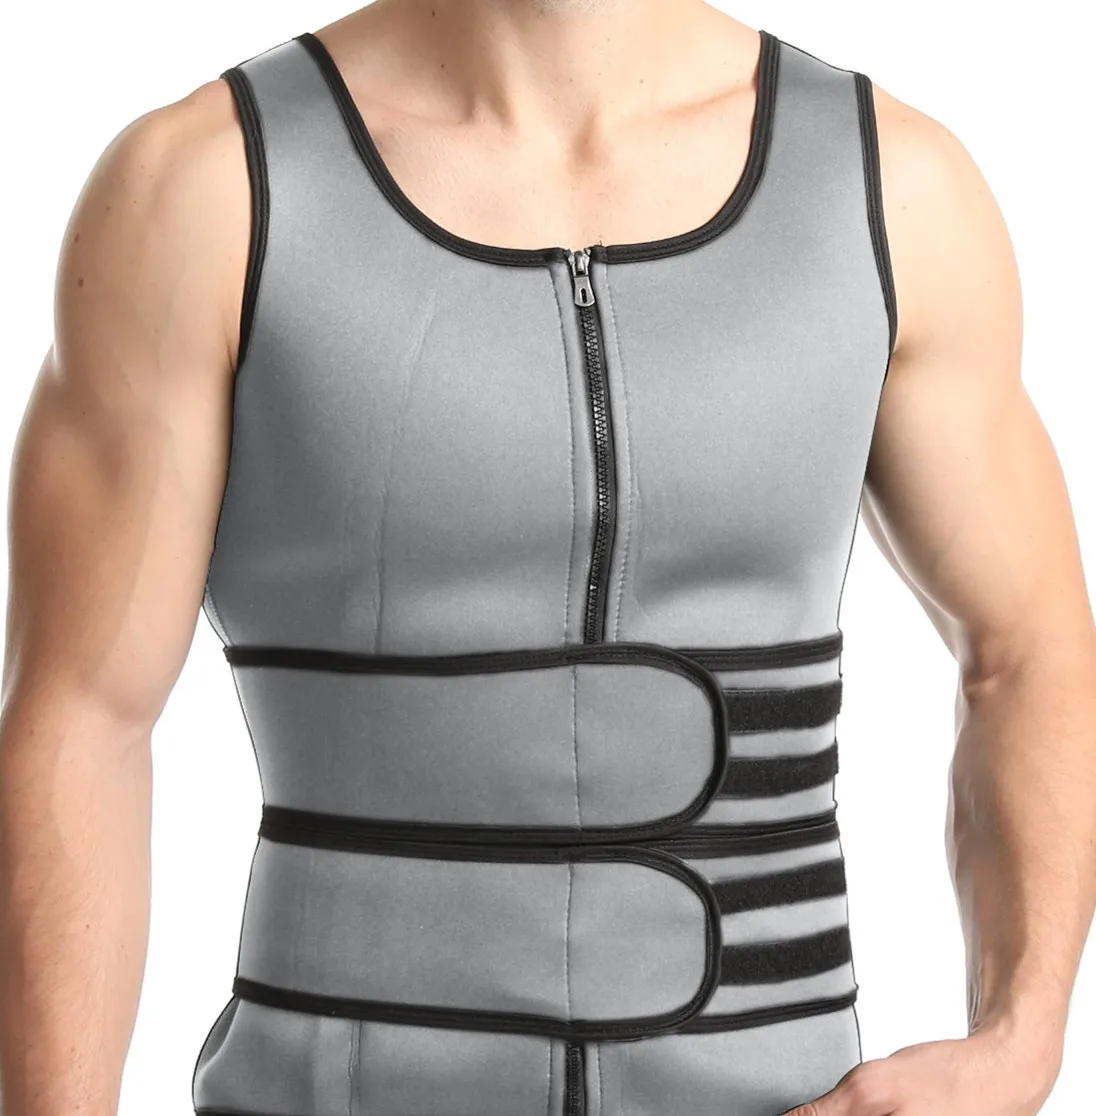 Amazon hot neoprene large size waist tight back fajas para hombres burst sweat fitness corset sports shapewear for men